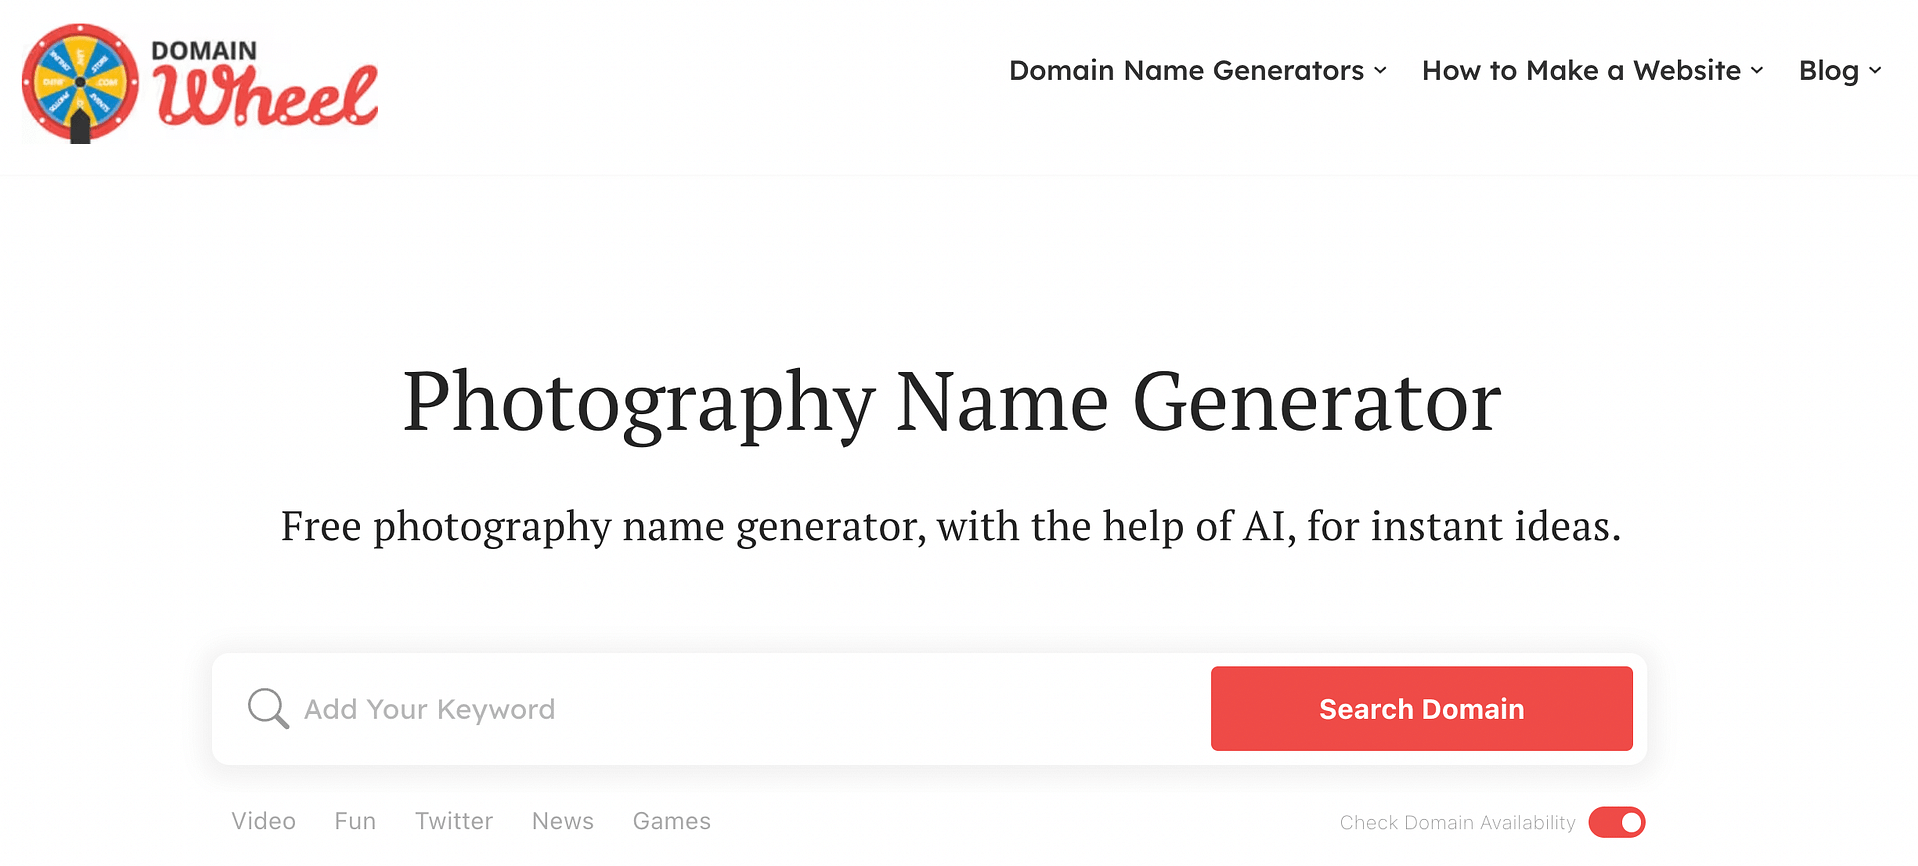 Domain Wheel's Photography Name Generator.